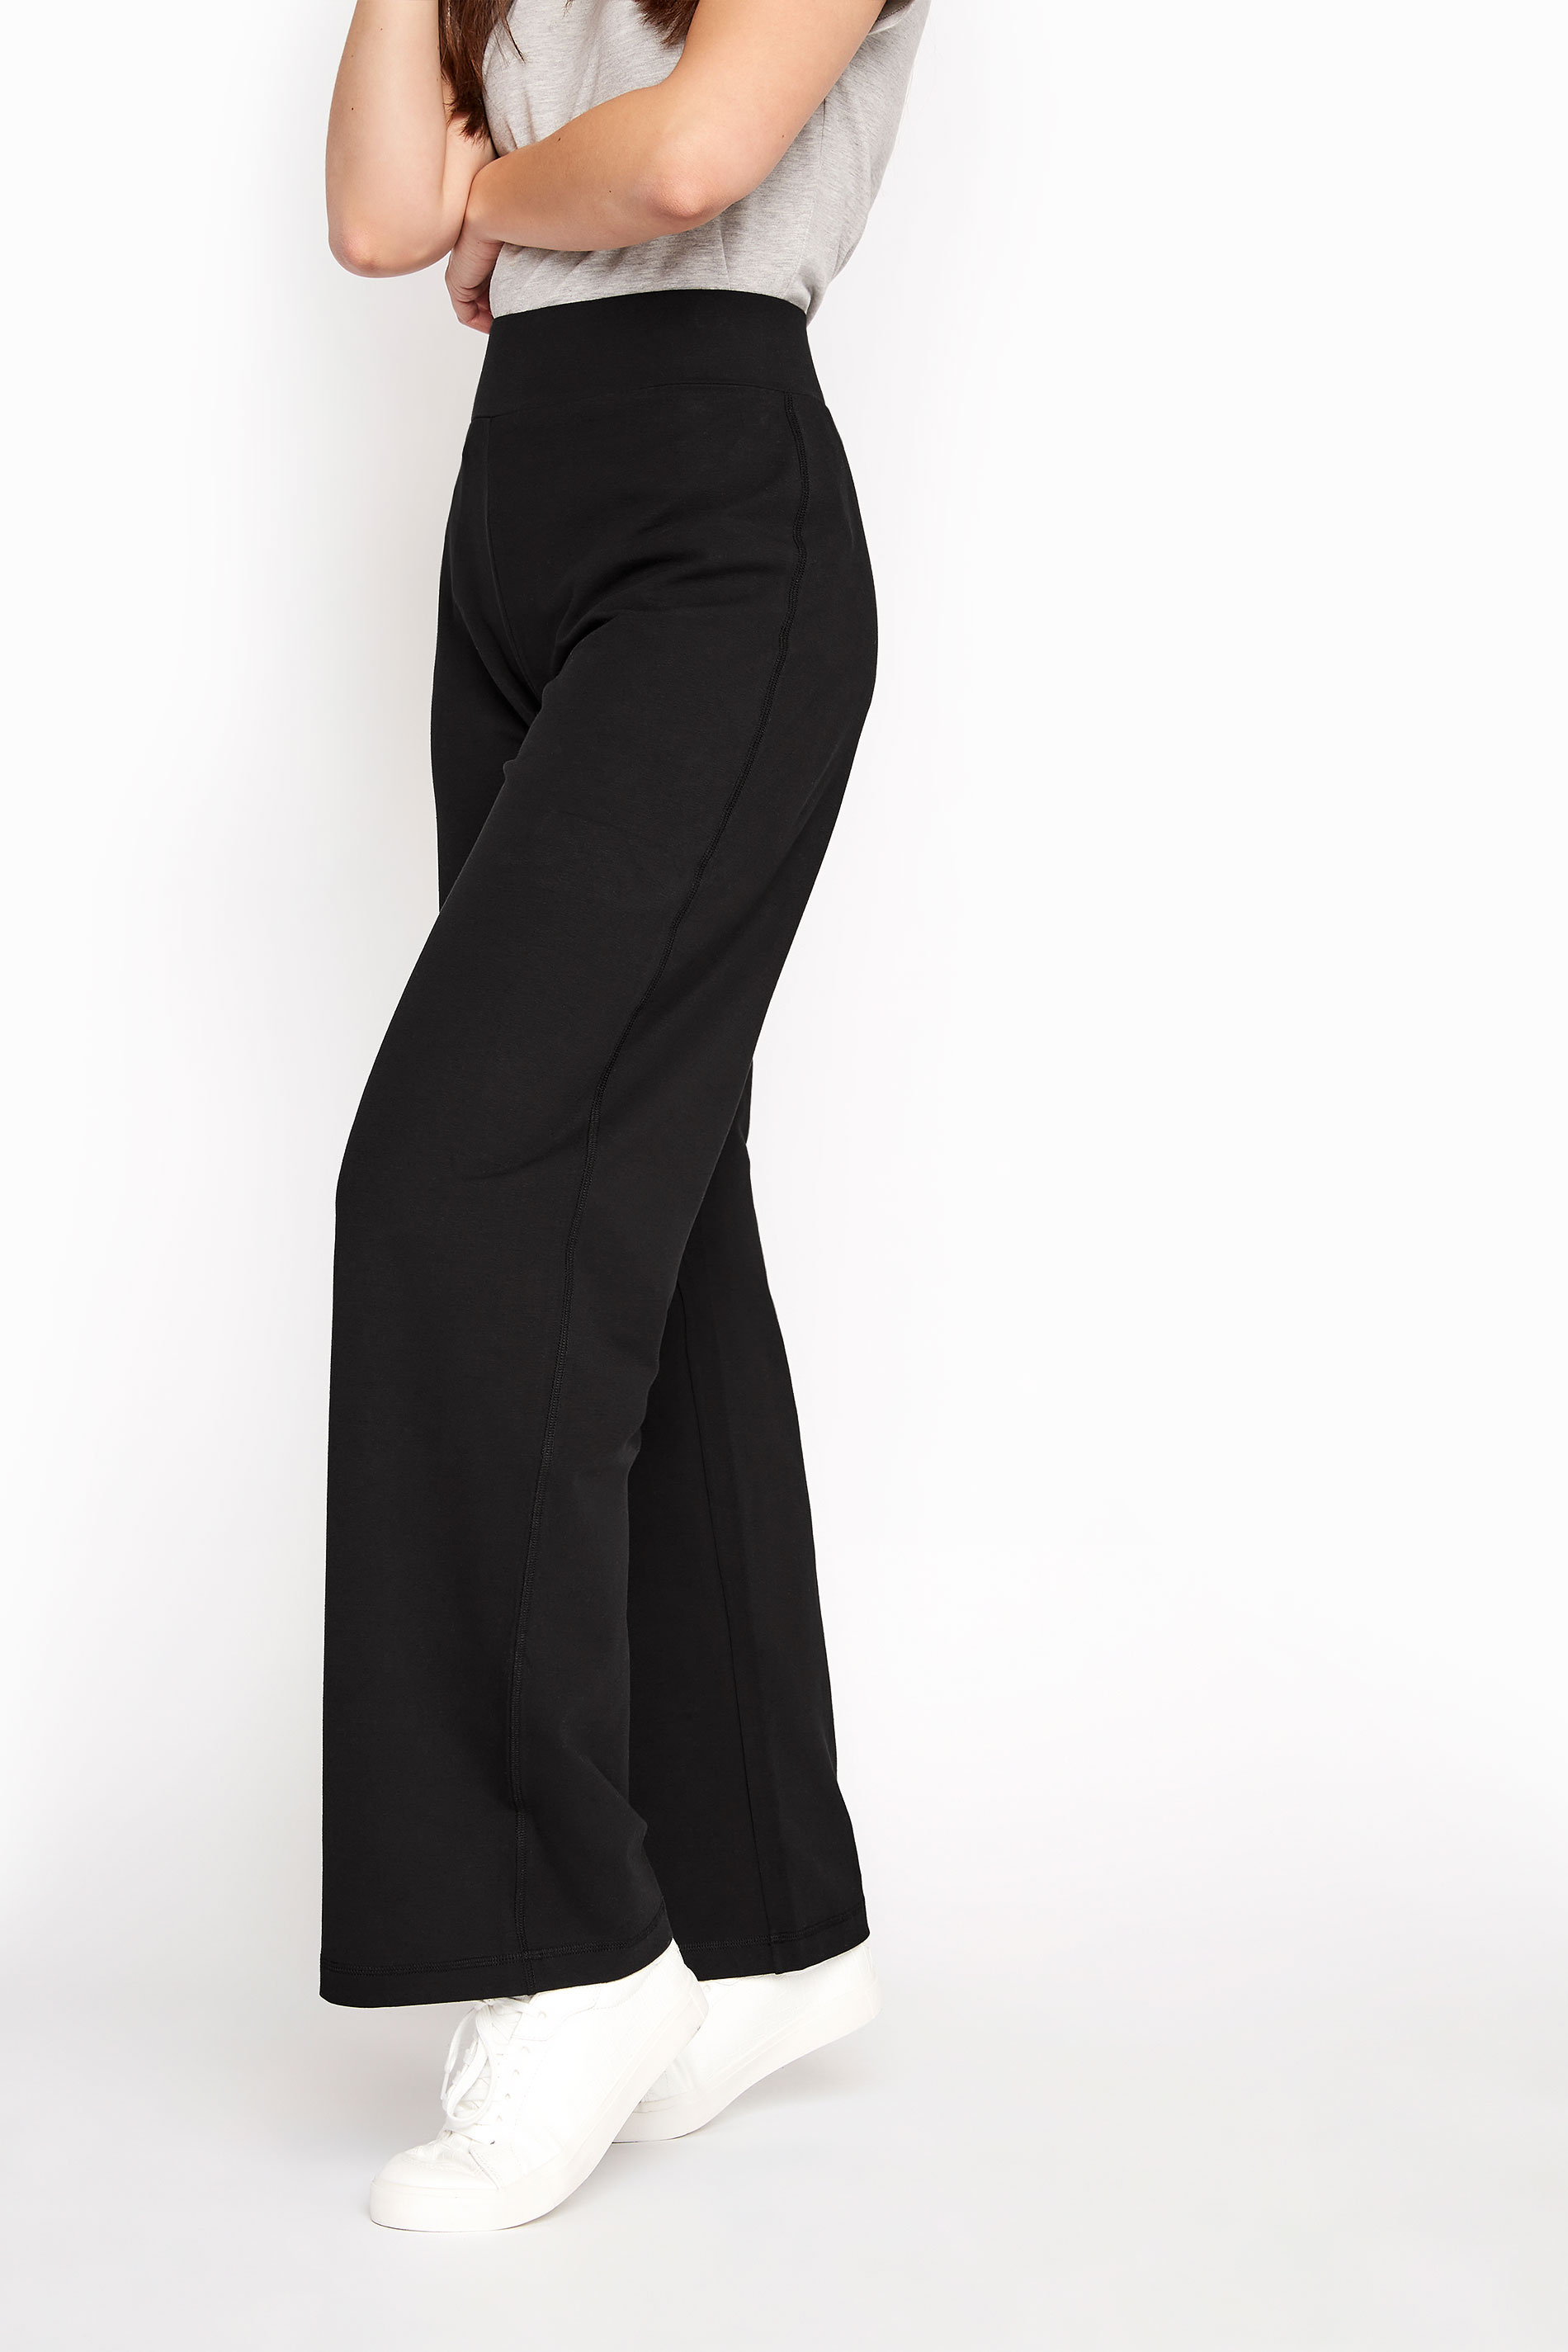 Black Wide Leg Yoga Pants | Long Tall Sally